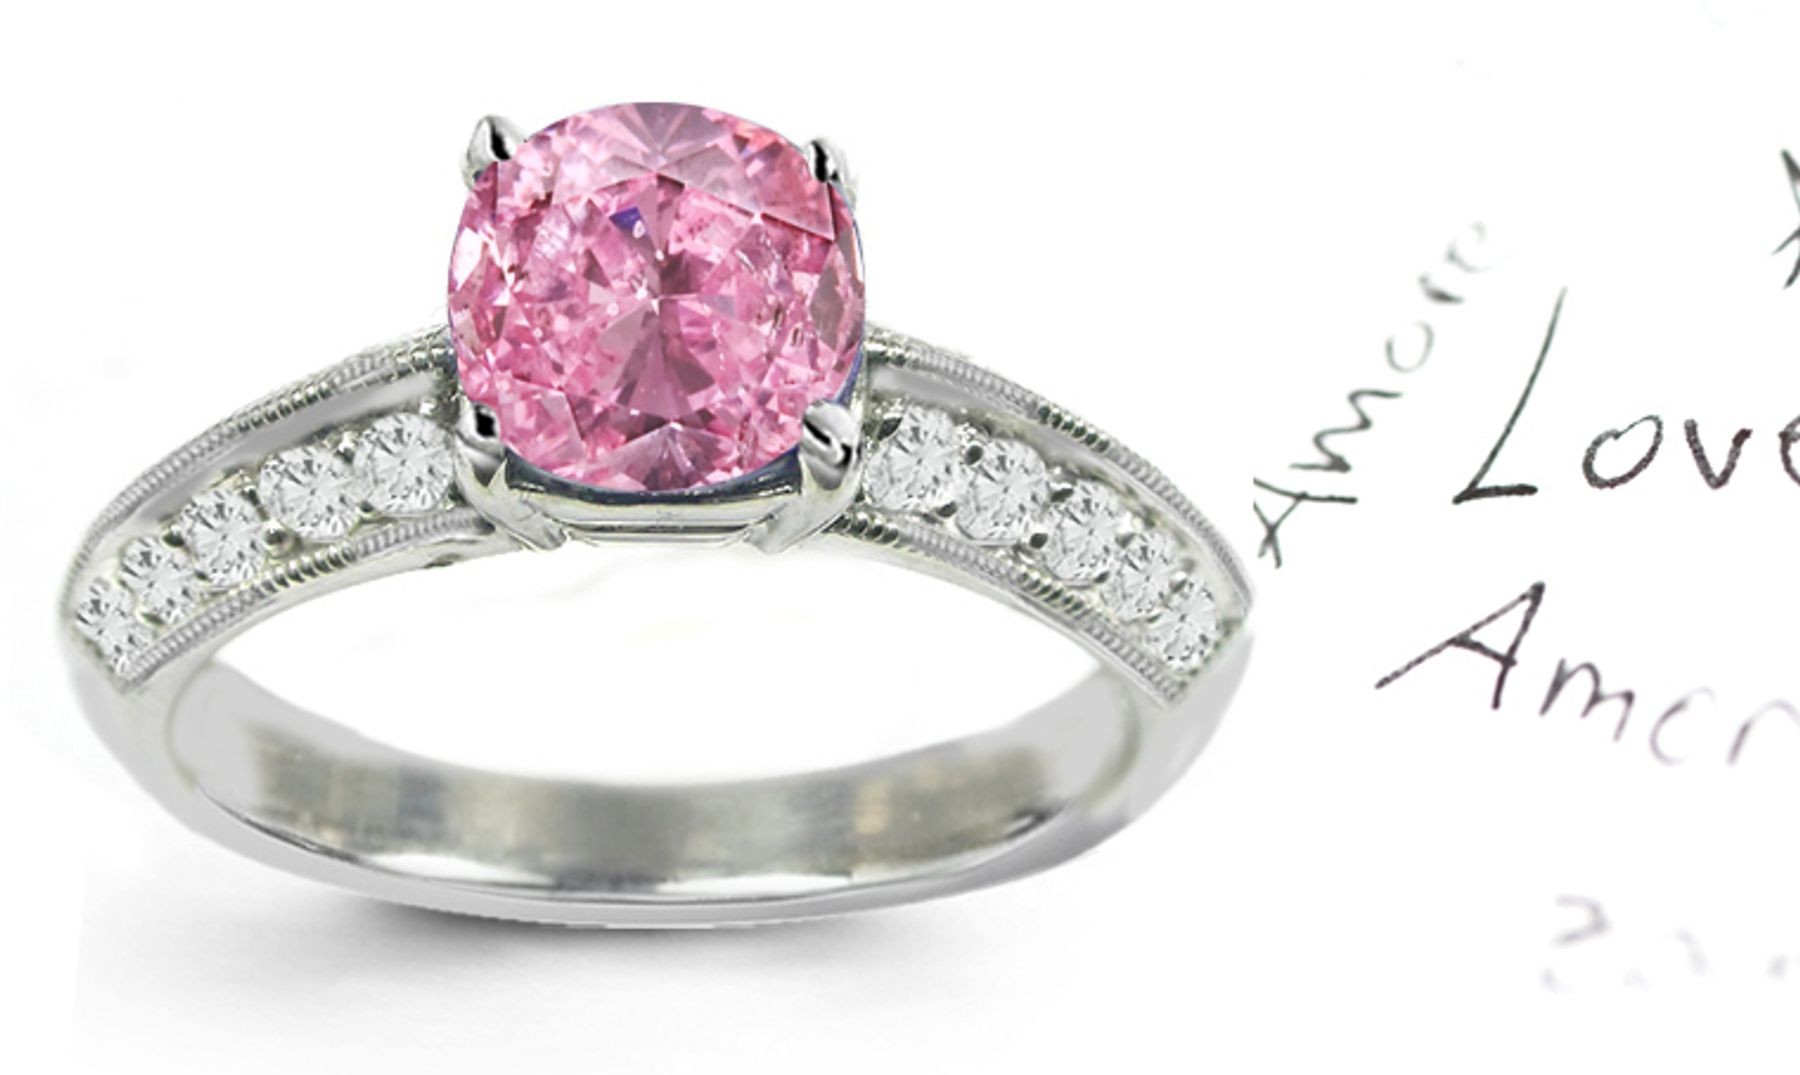 Premier Colored Diamonds Designer Collection - Pink Colored Diamonds & White Diamonds Fancy Pink Diamond Engagement Rings